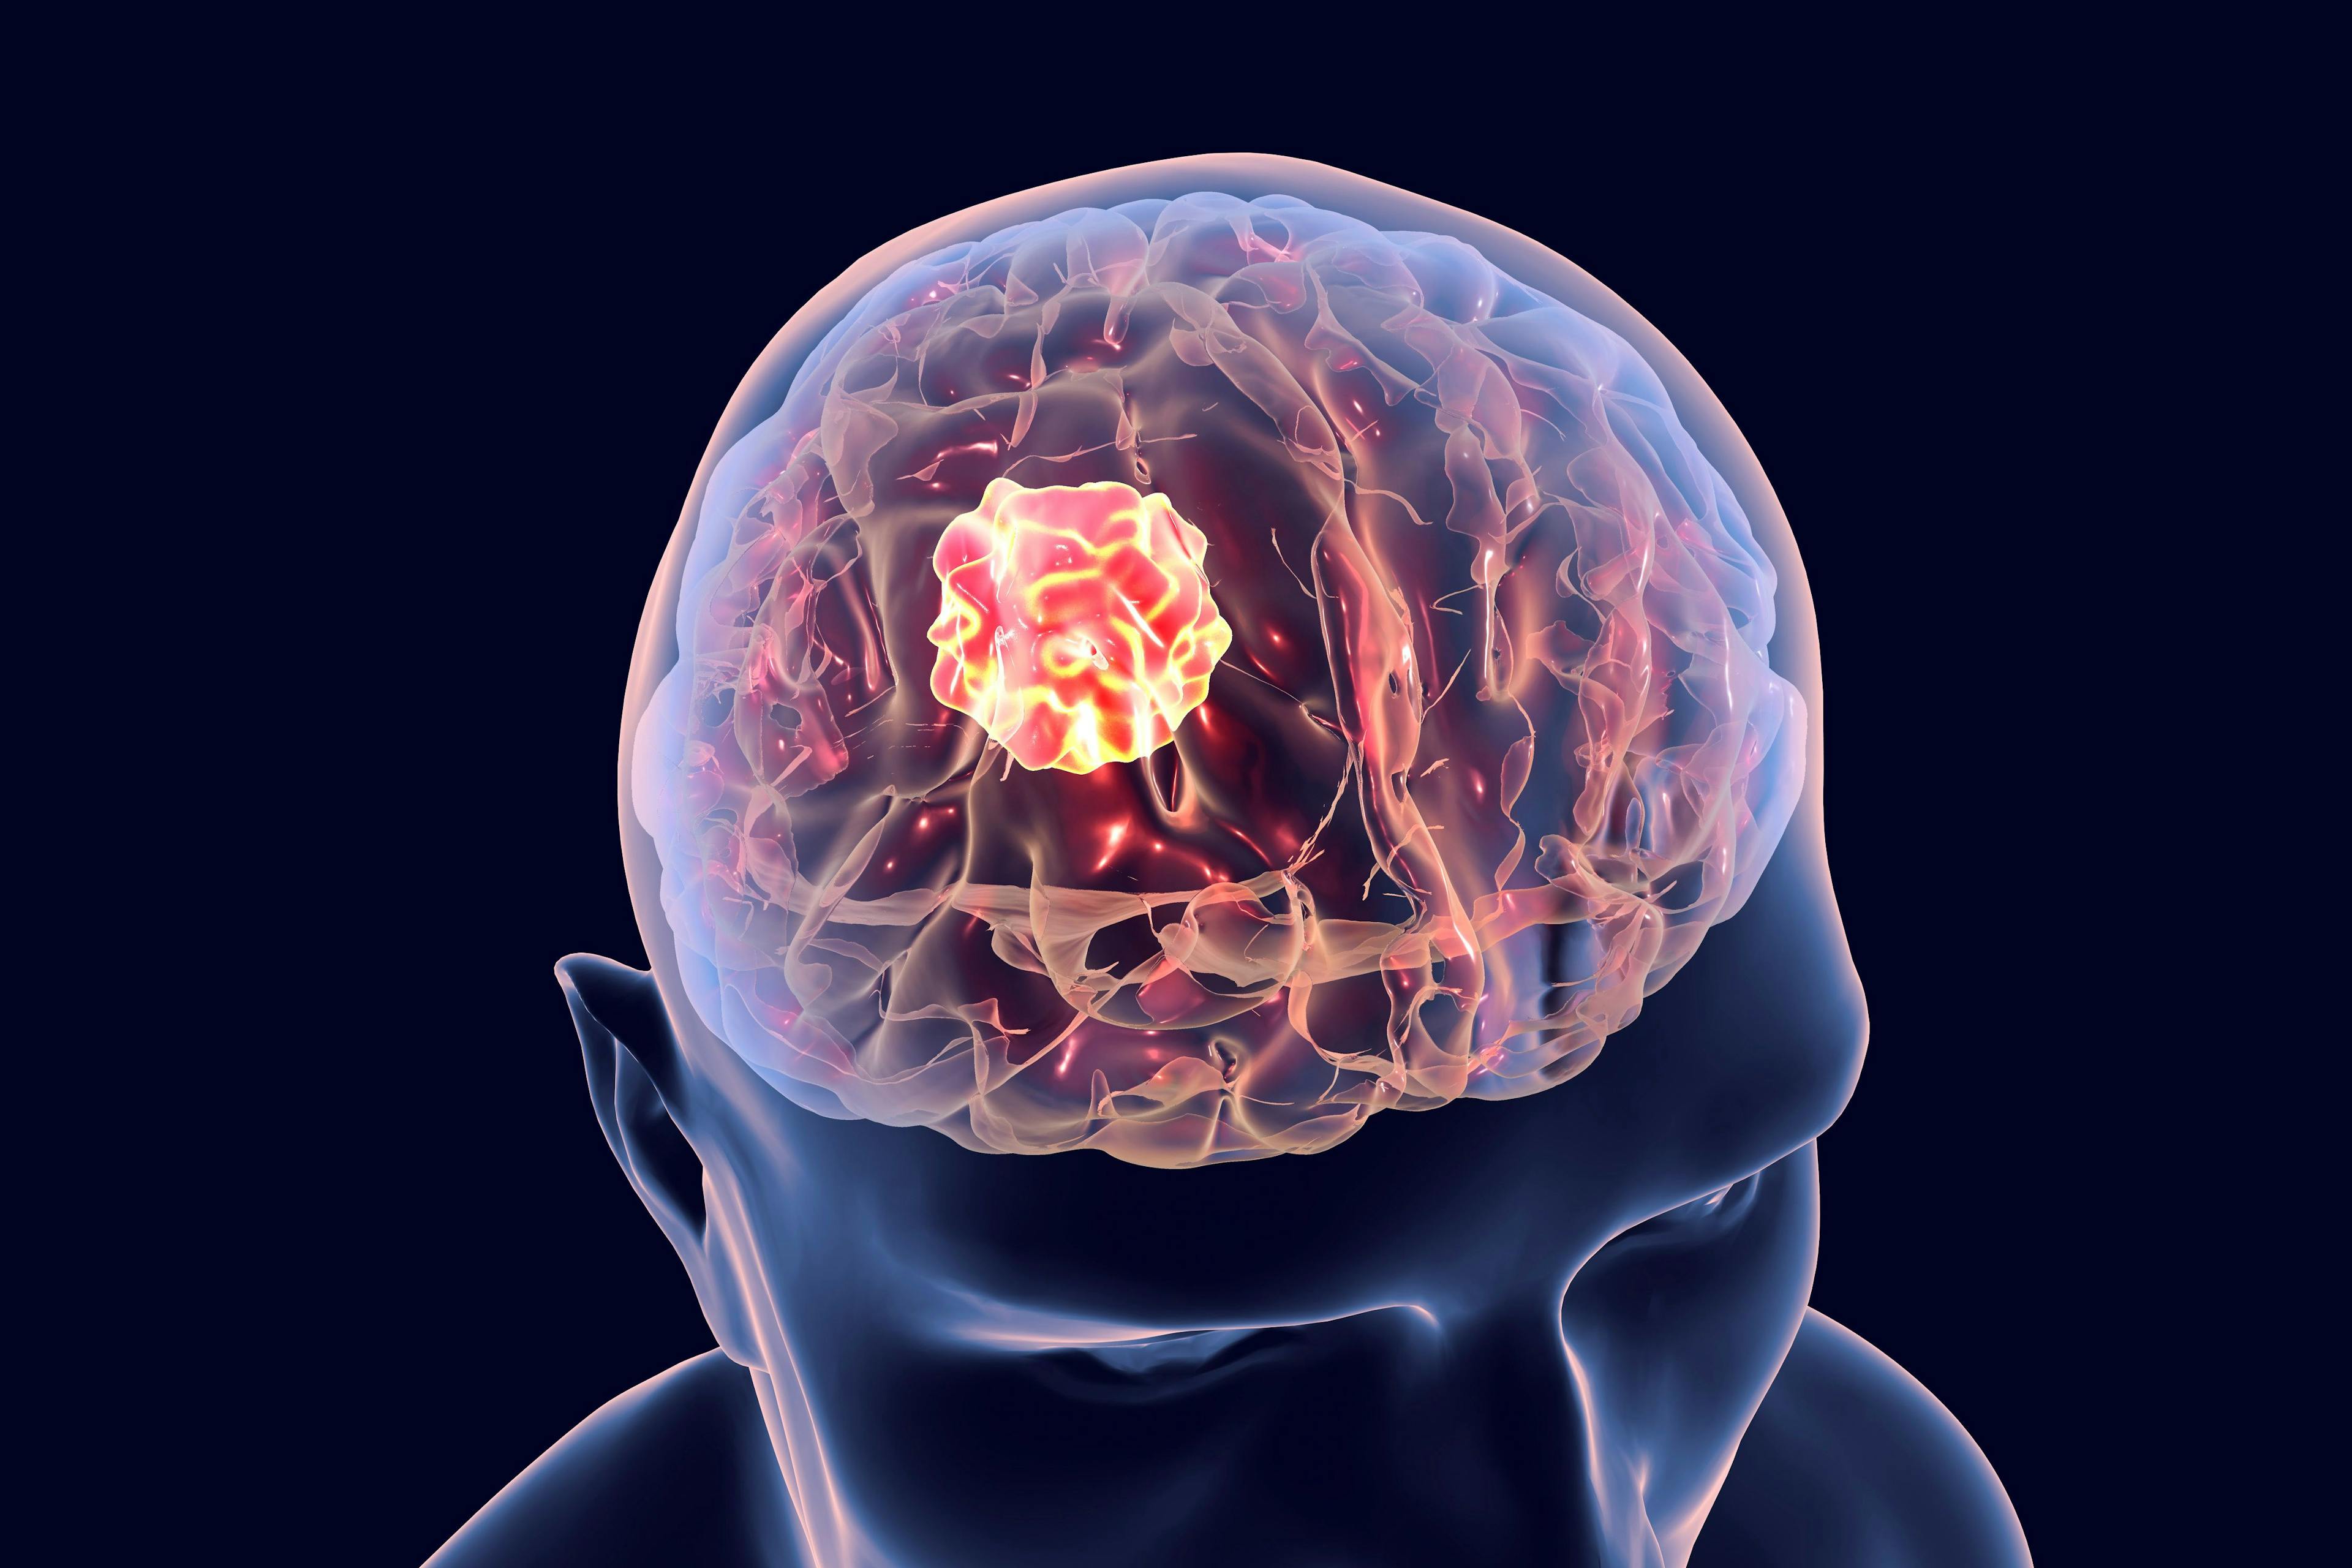 Brain cancer, 3D illustration showing presence of tumor inside brain. Credit: Dr_Microbe - stock.adobe.com